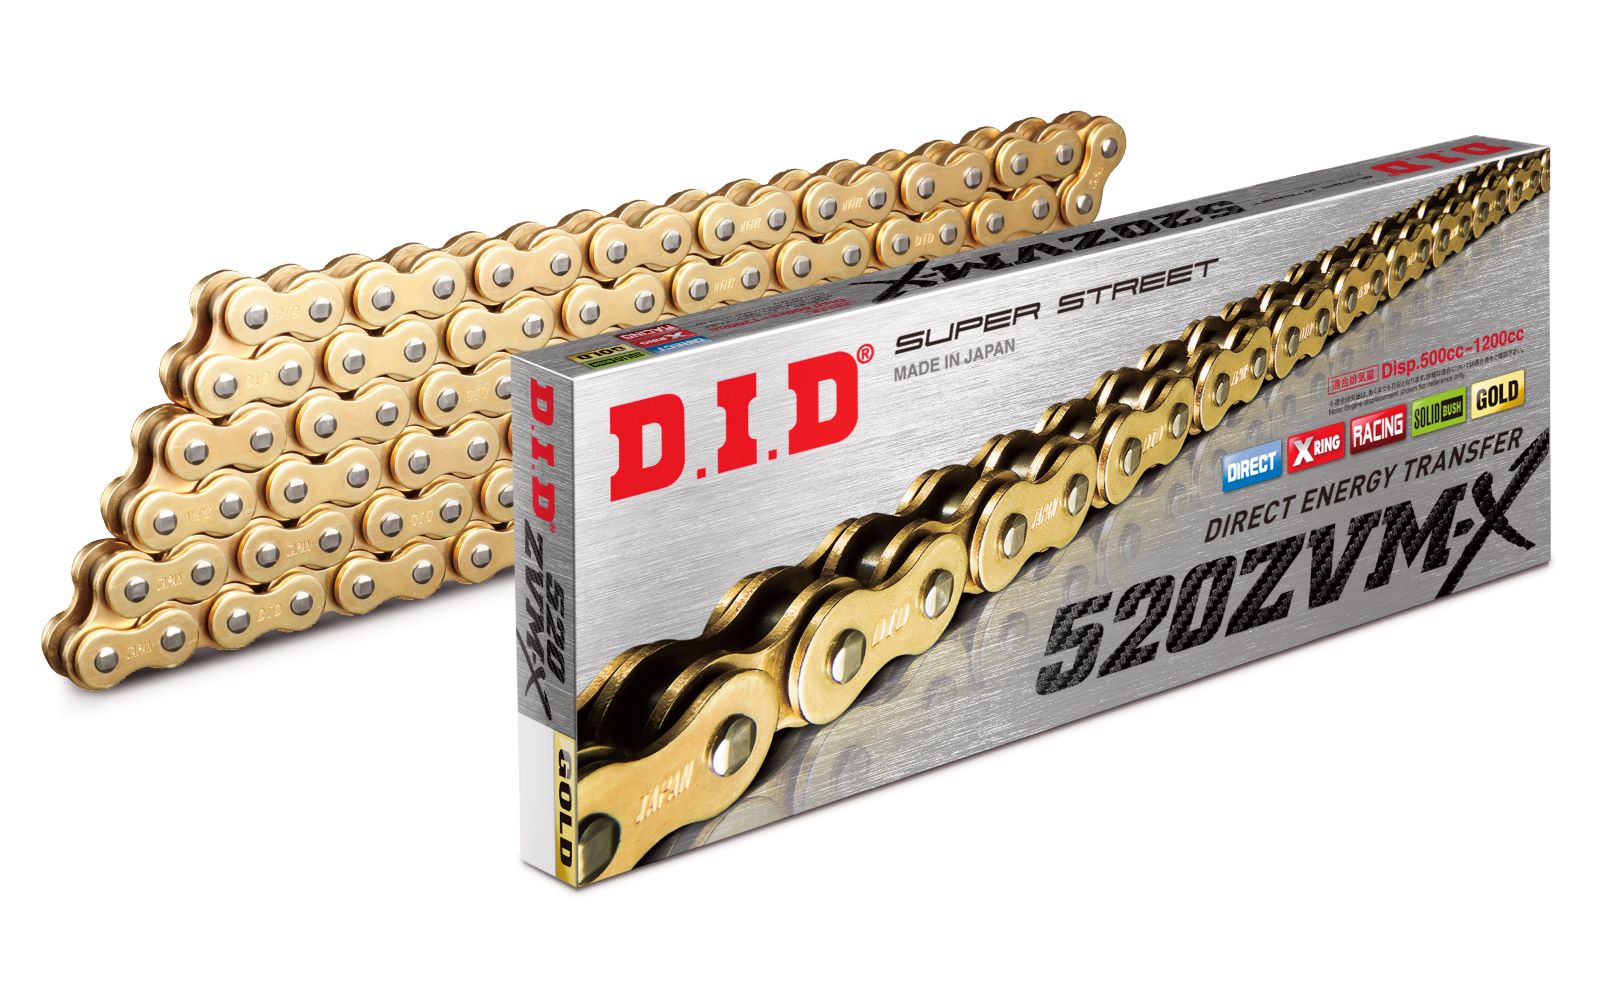 DID 520 x 150 Links ZVMX Super Street Series Xring Sealed Gold Drive Chain